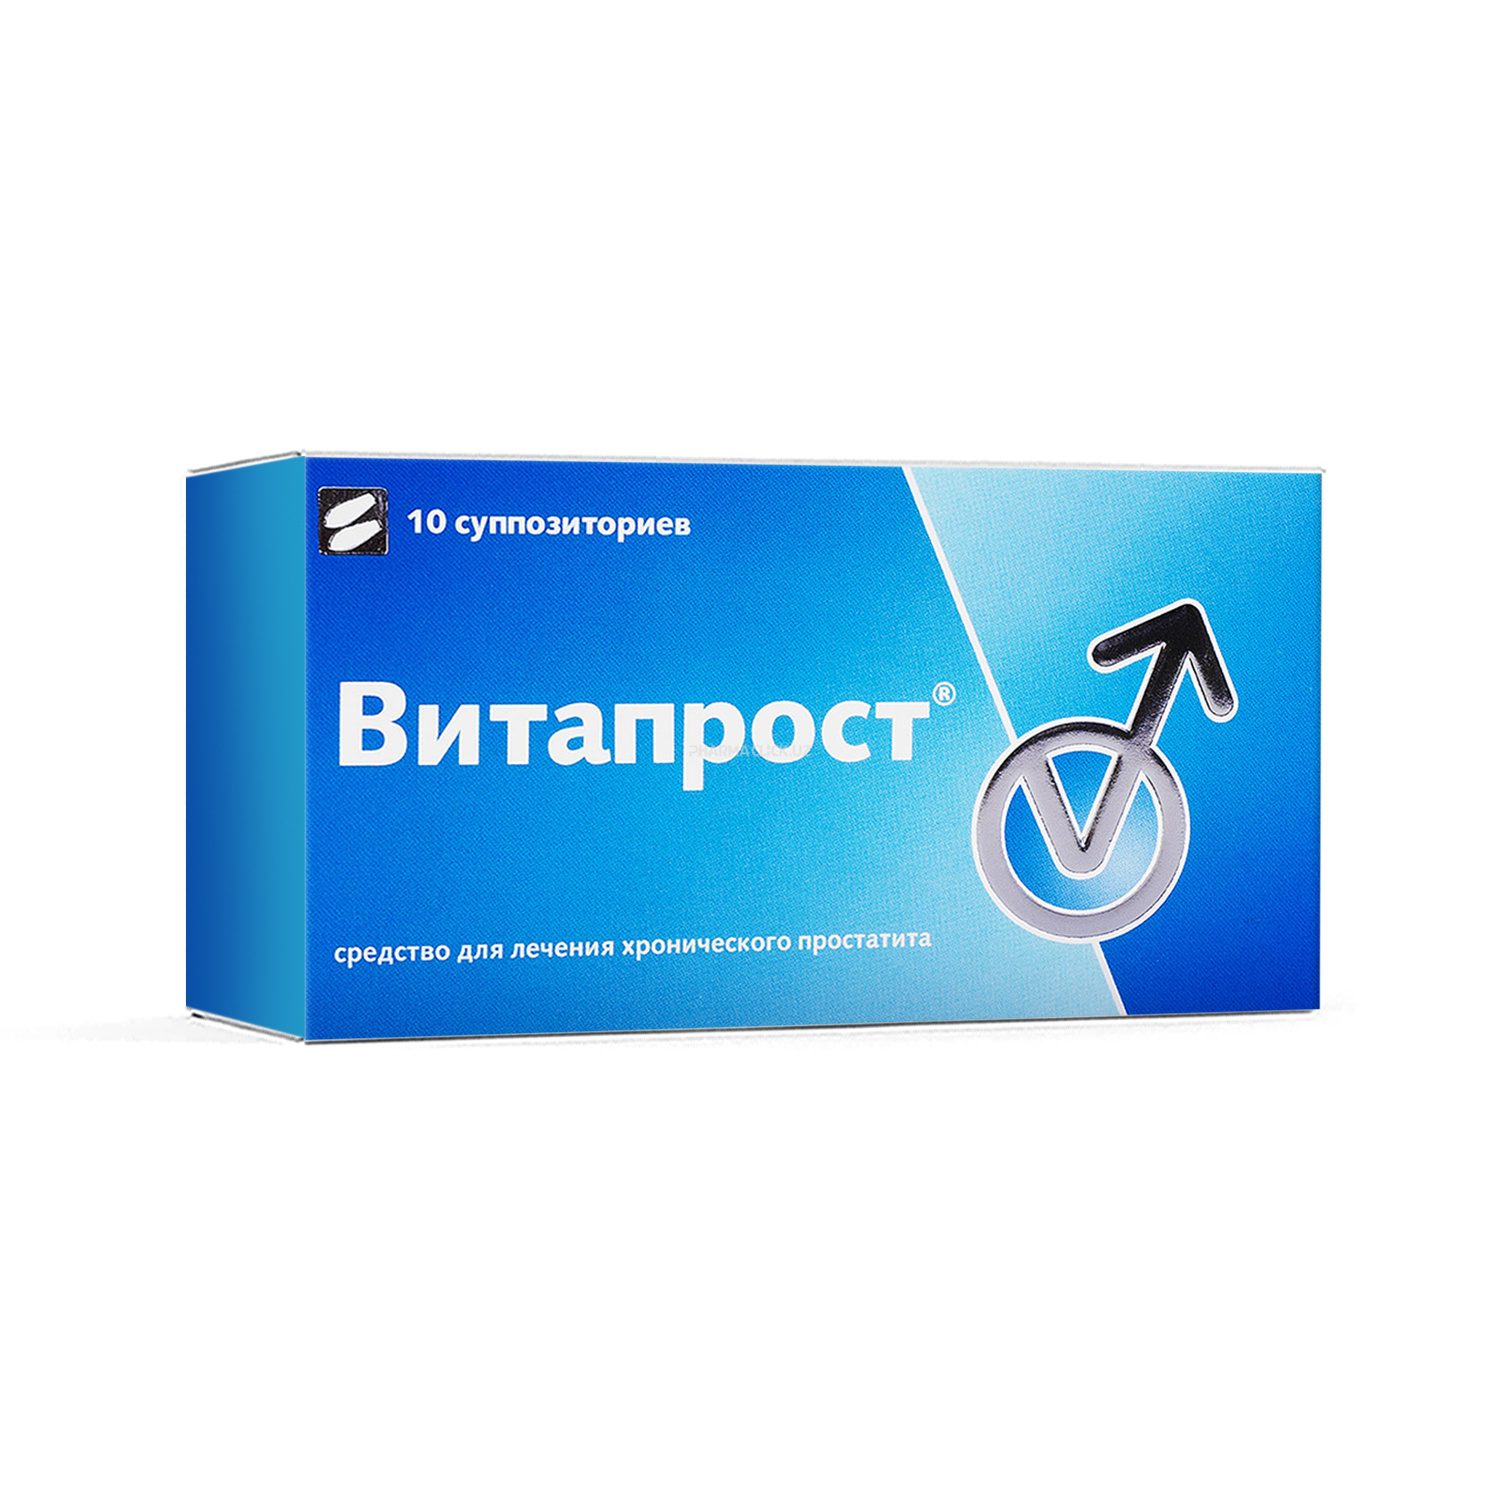 Vitaprost rektal suppozitoriylar 10 mg № 10 (Nijfarm)